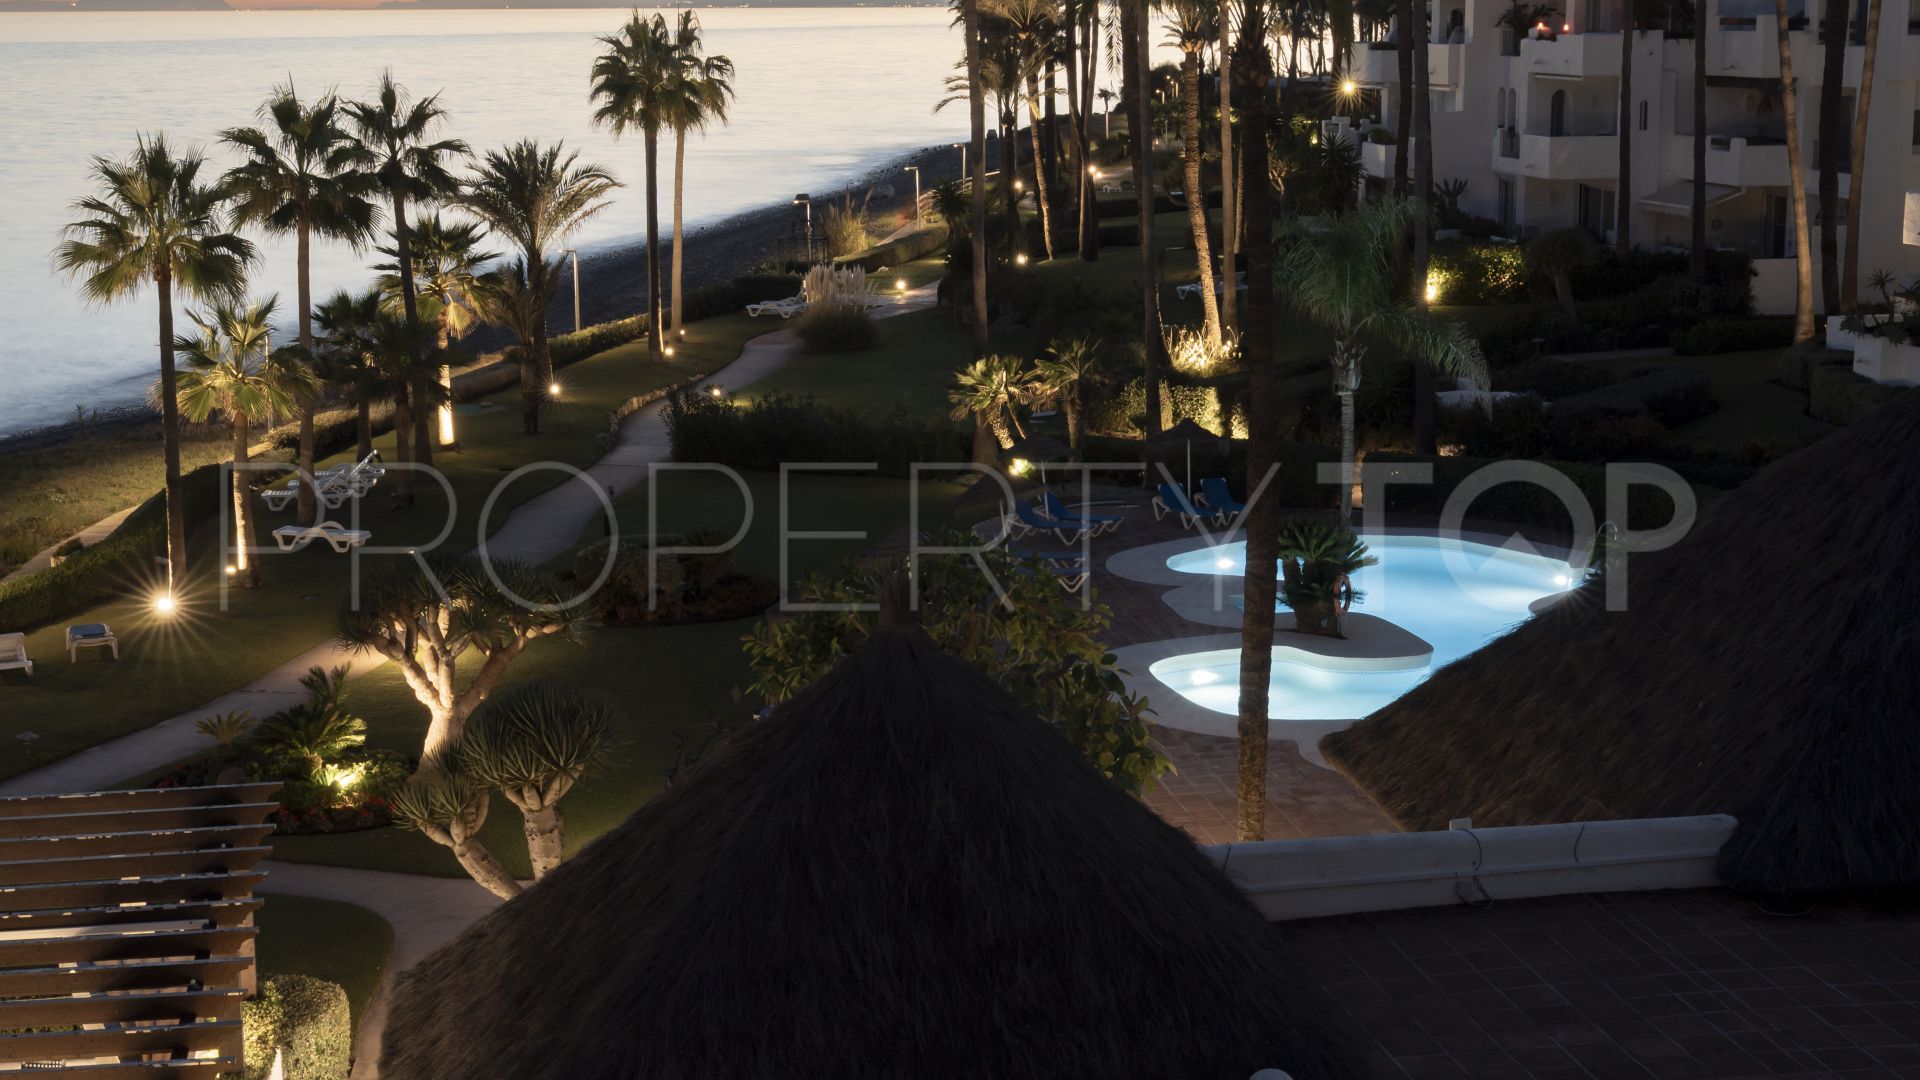 2 bedrooms Alcazaba Beach duplex penthouse for sale